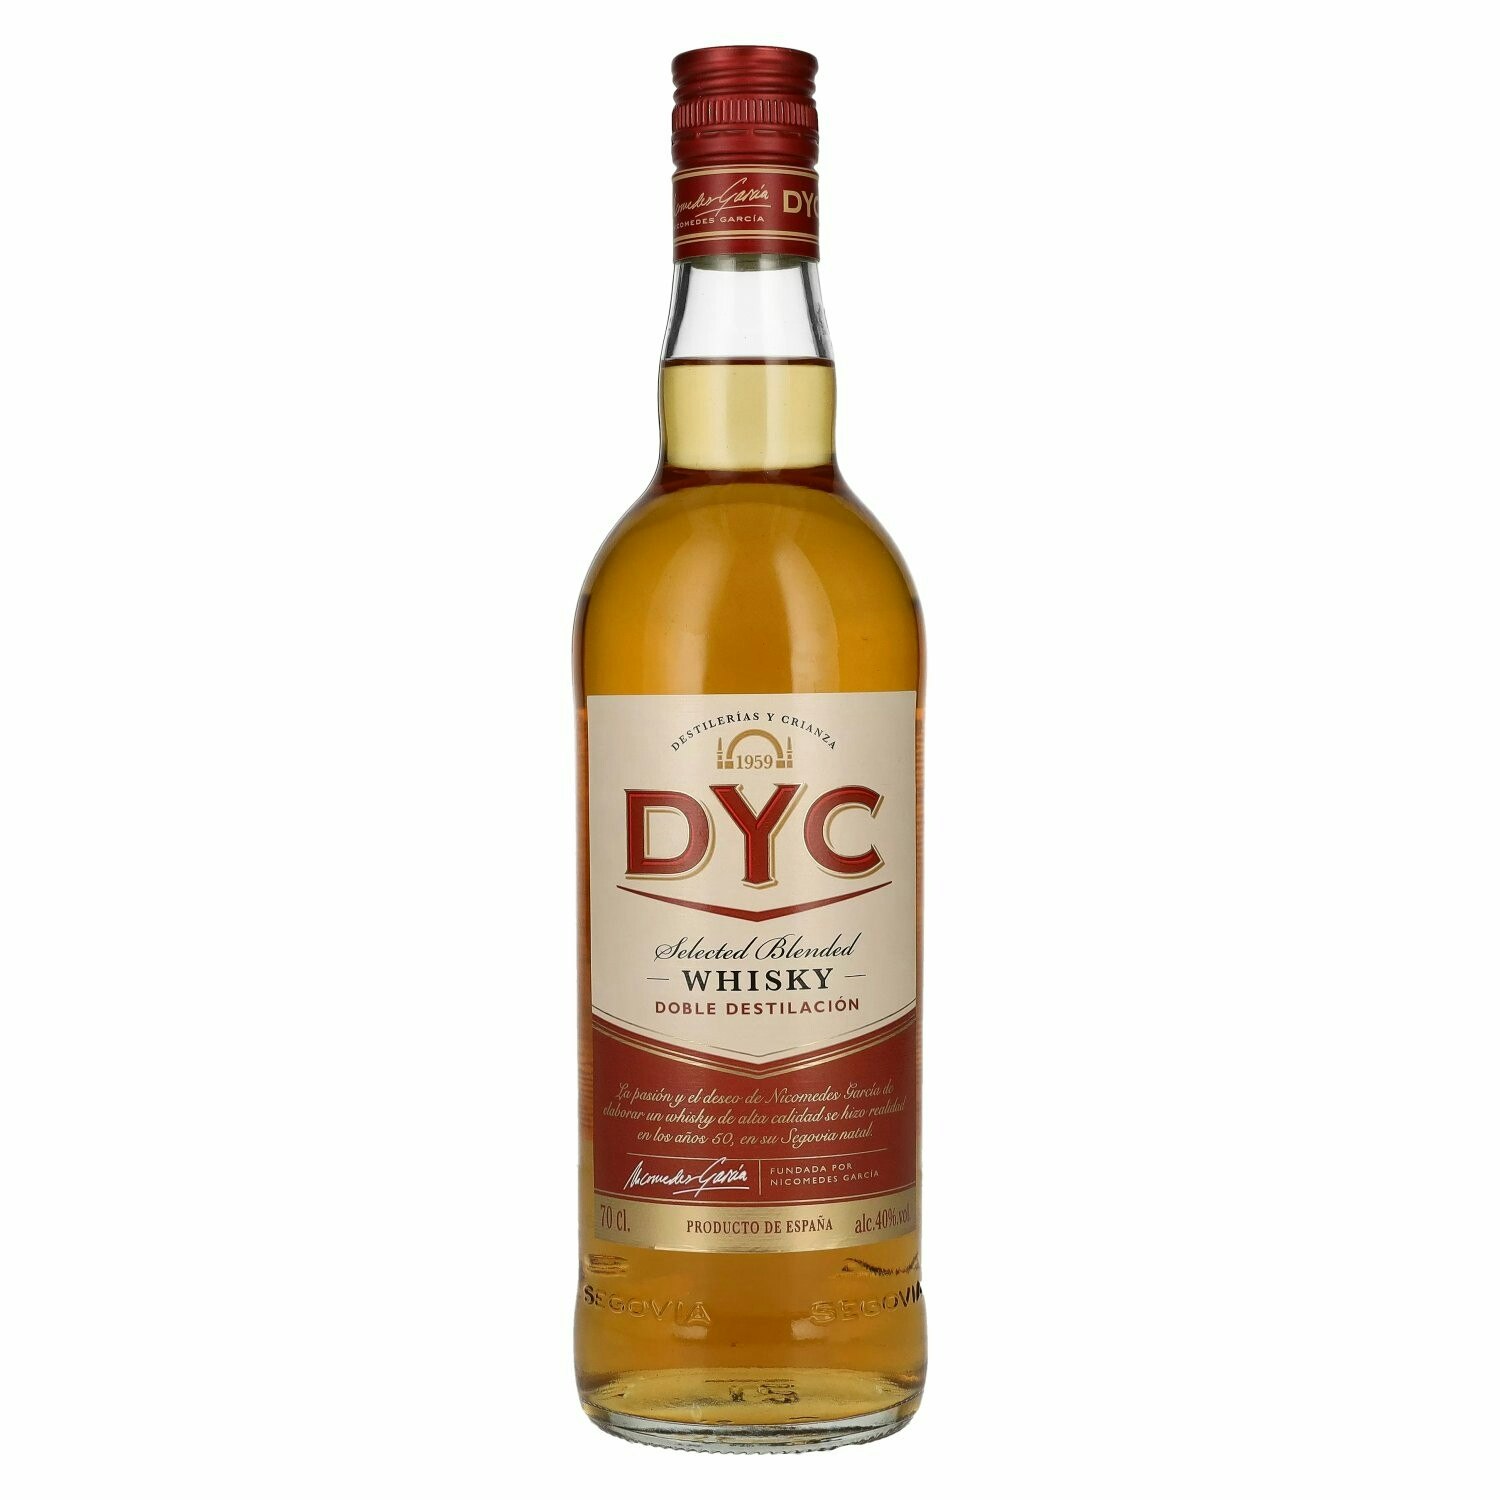 DYC Destilerias y Crianza Selected Blended Whisky 40% Vol. 0,7l